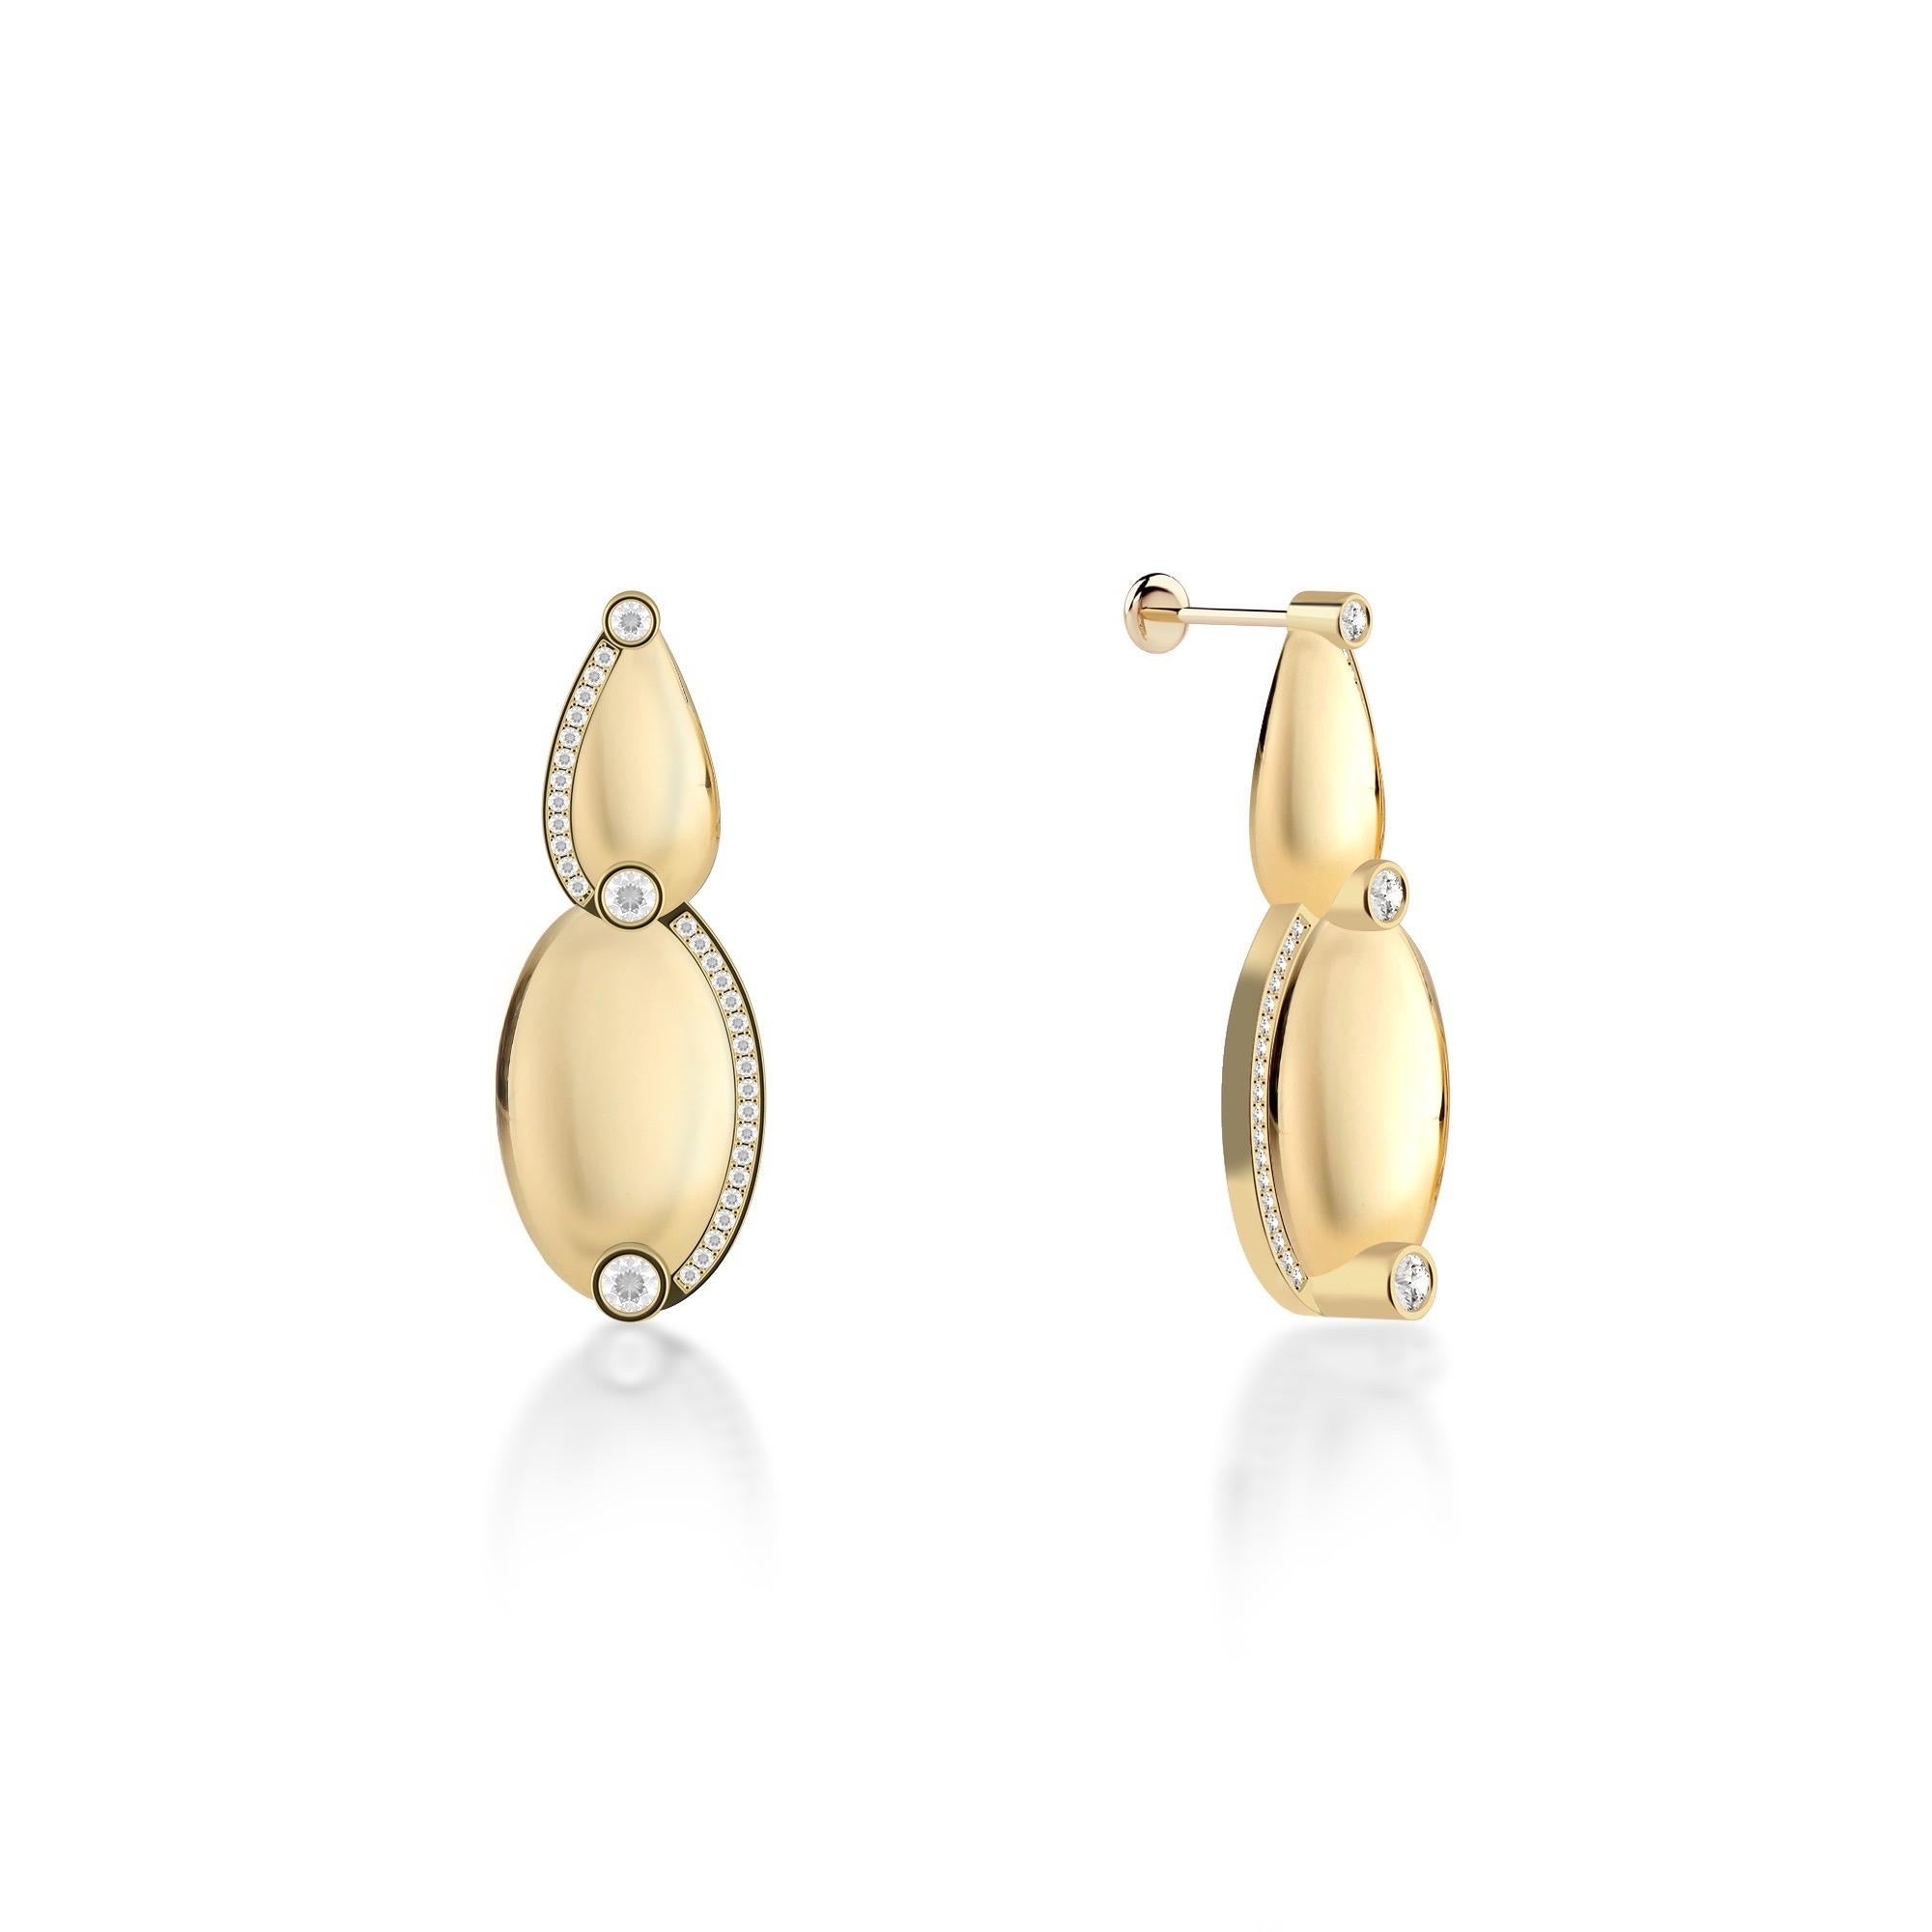 Ruben Manuel Designs “Summer” Earrings 18K YG, 2 ovals set with VS diamonds.  1.09 ctw.